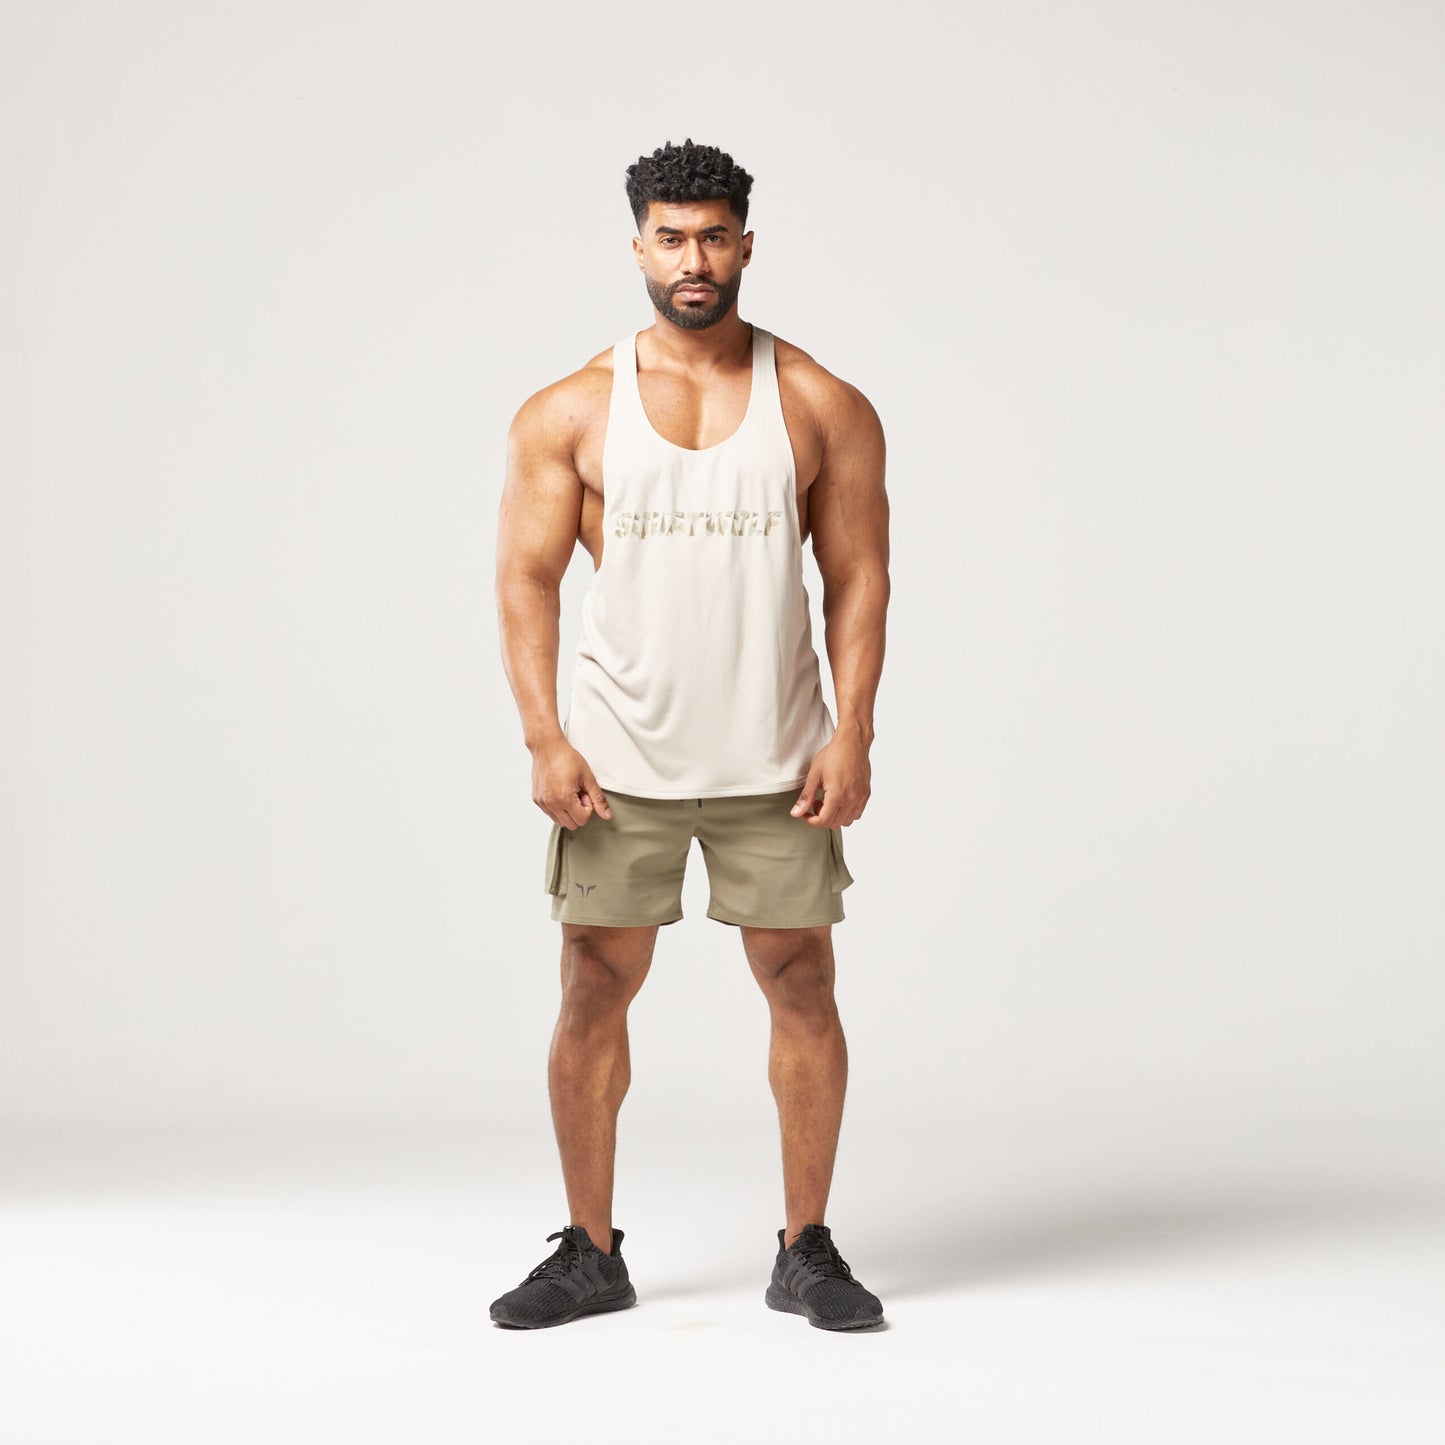 squatwolf-gym-wear-code-urban-stringer-cobblestone-stringer-vests-for-men